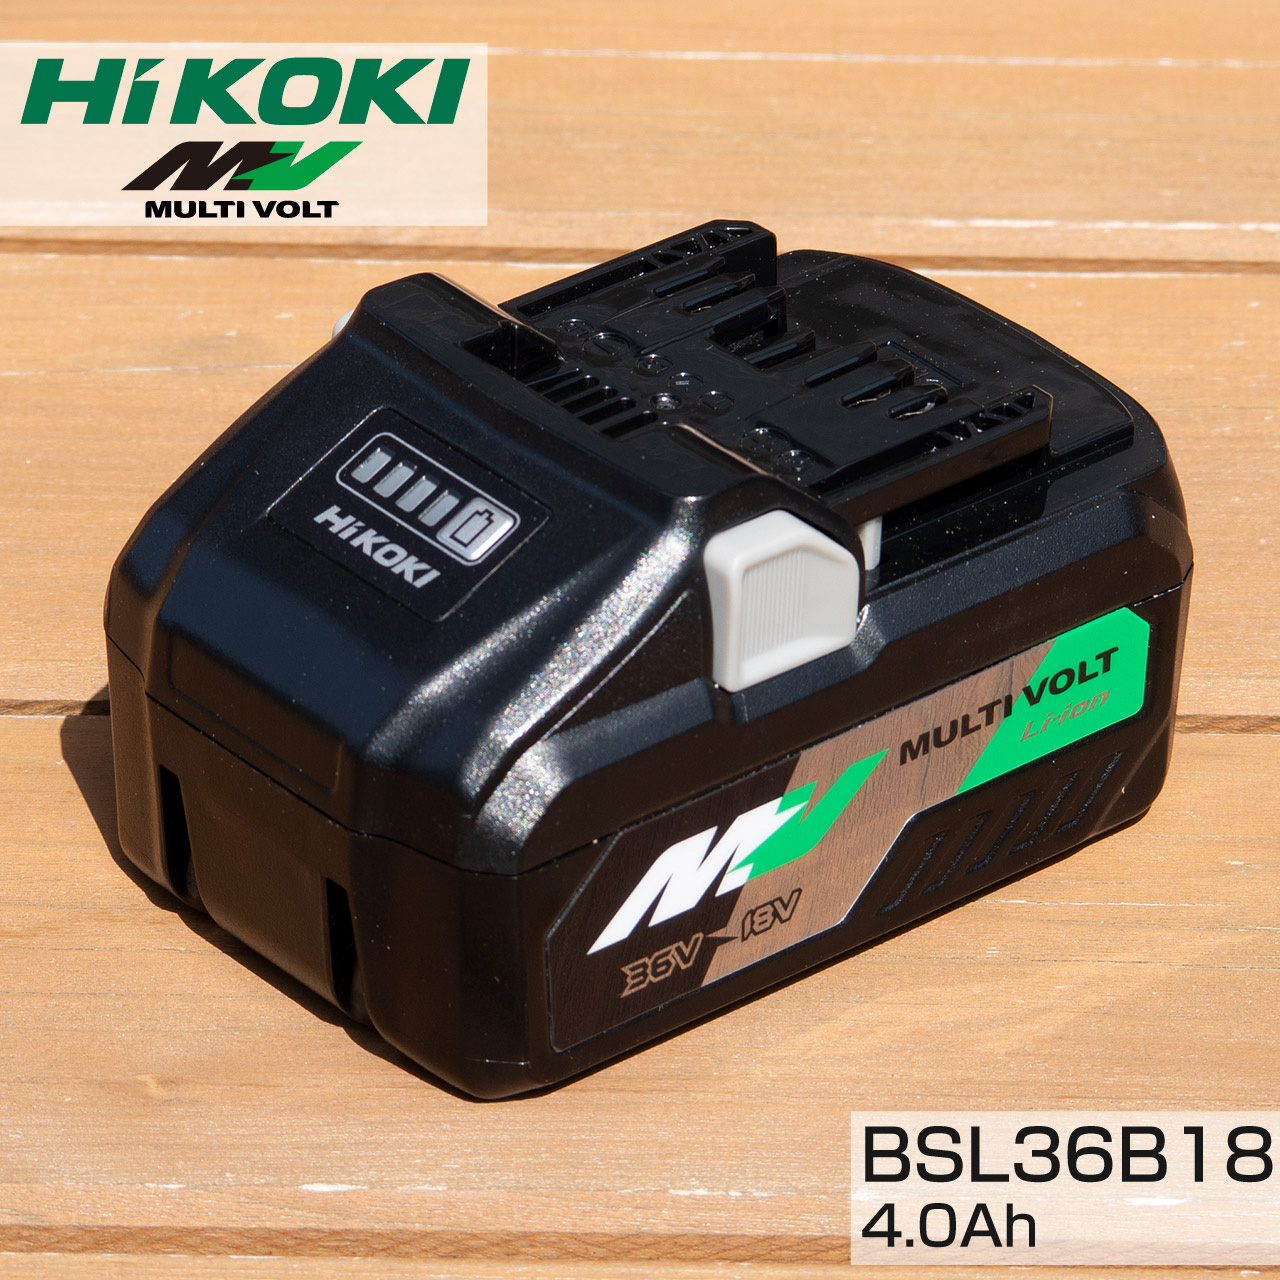 HiKOKI ハイコーキ マルチボルト リチウムイオン電池 バッテリー BSL36B18 4.0Ah マルチボルト製品 芝生のことならバロネスダイレクト